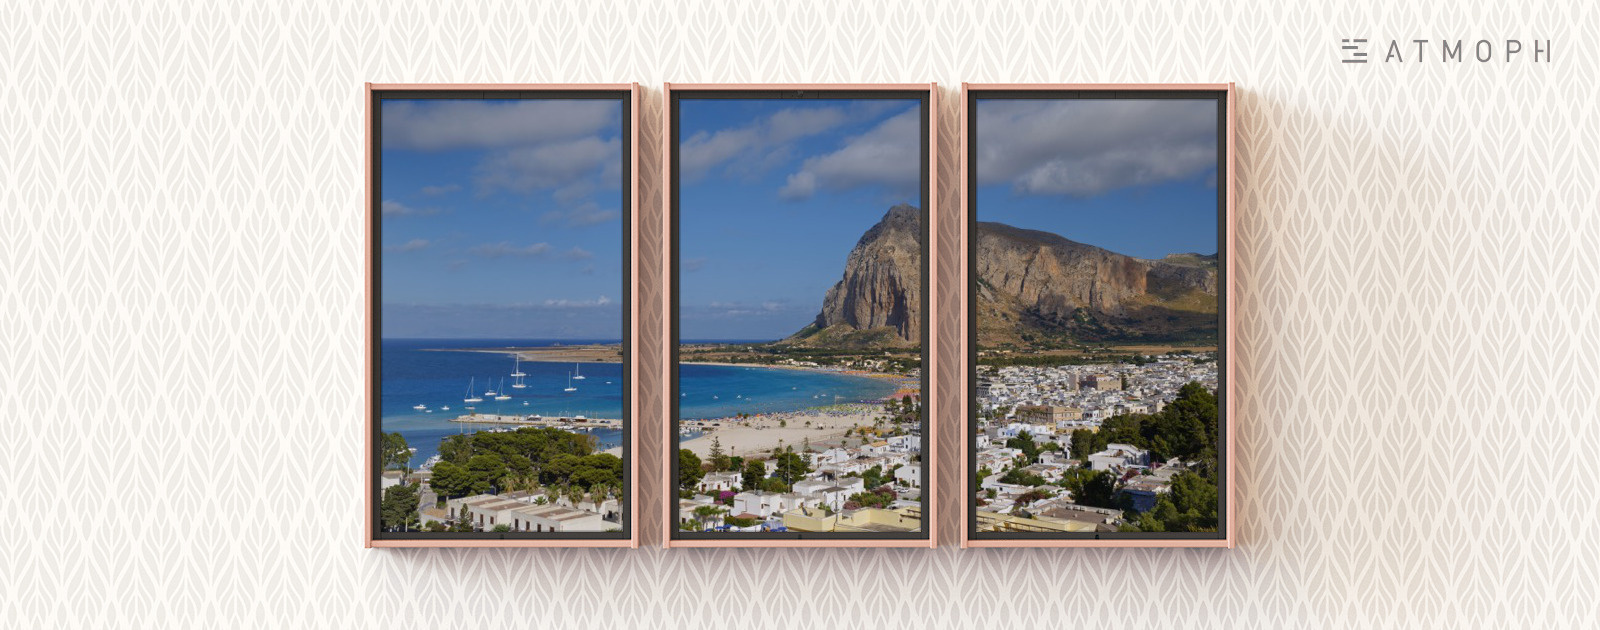 New Views 言わずと知れたリゾート地シチリアの風景を Atmoph Window 2で追加配信 Newscast